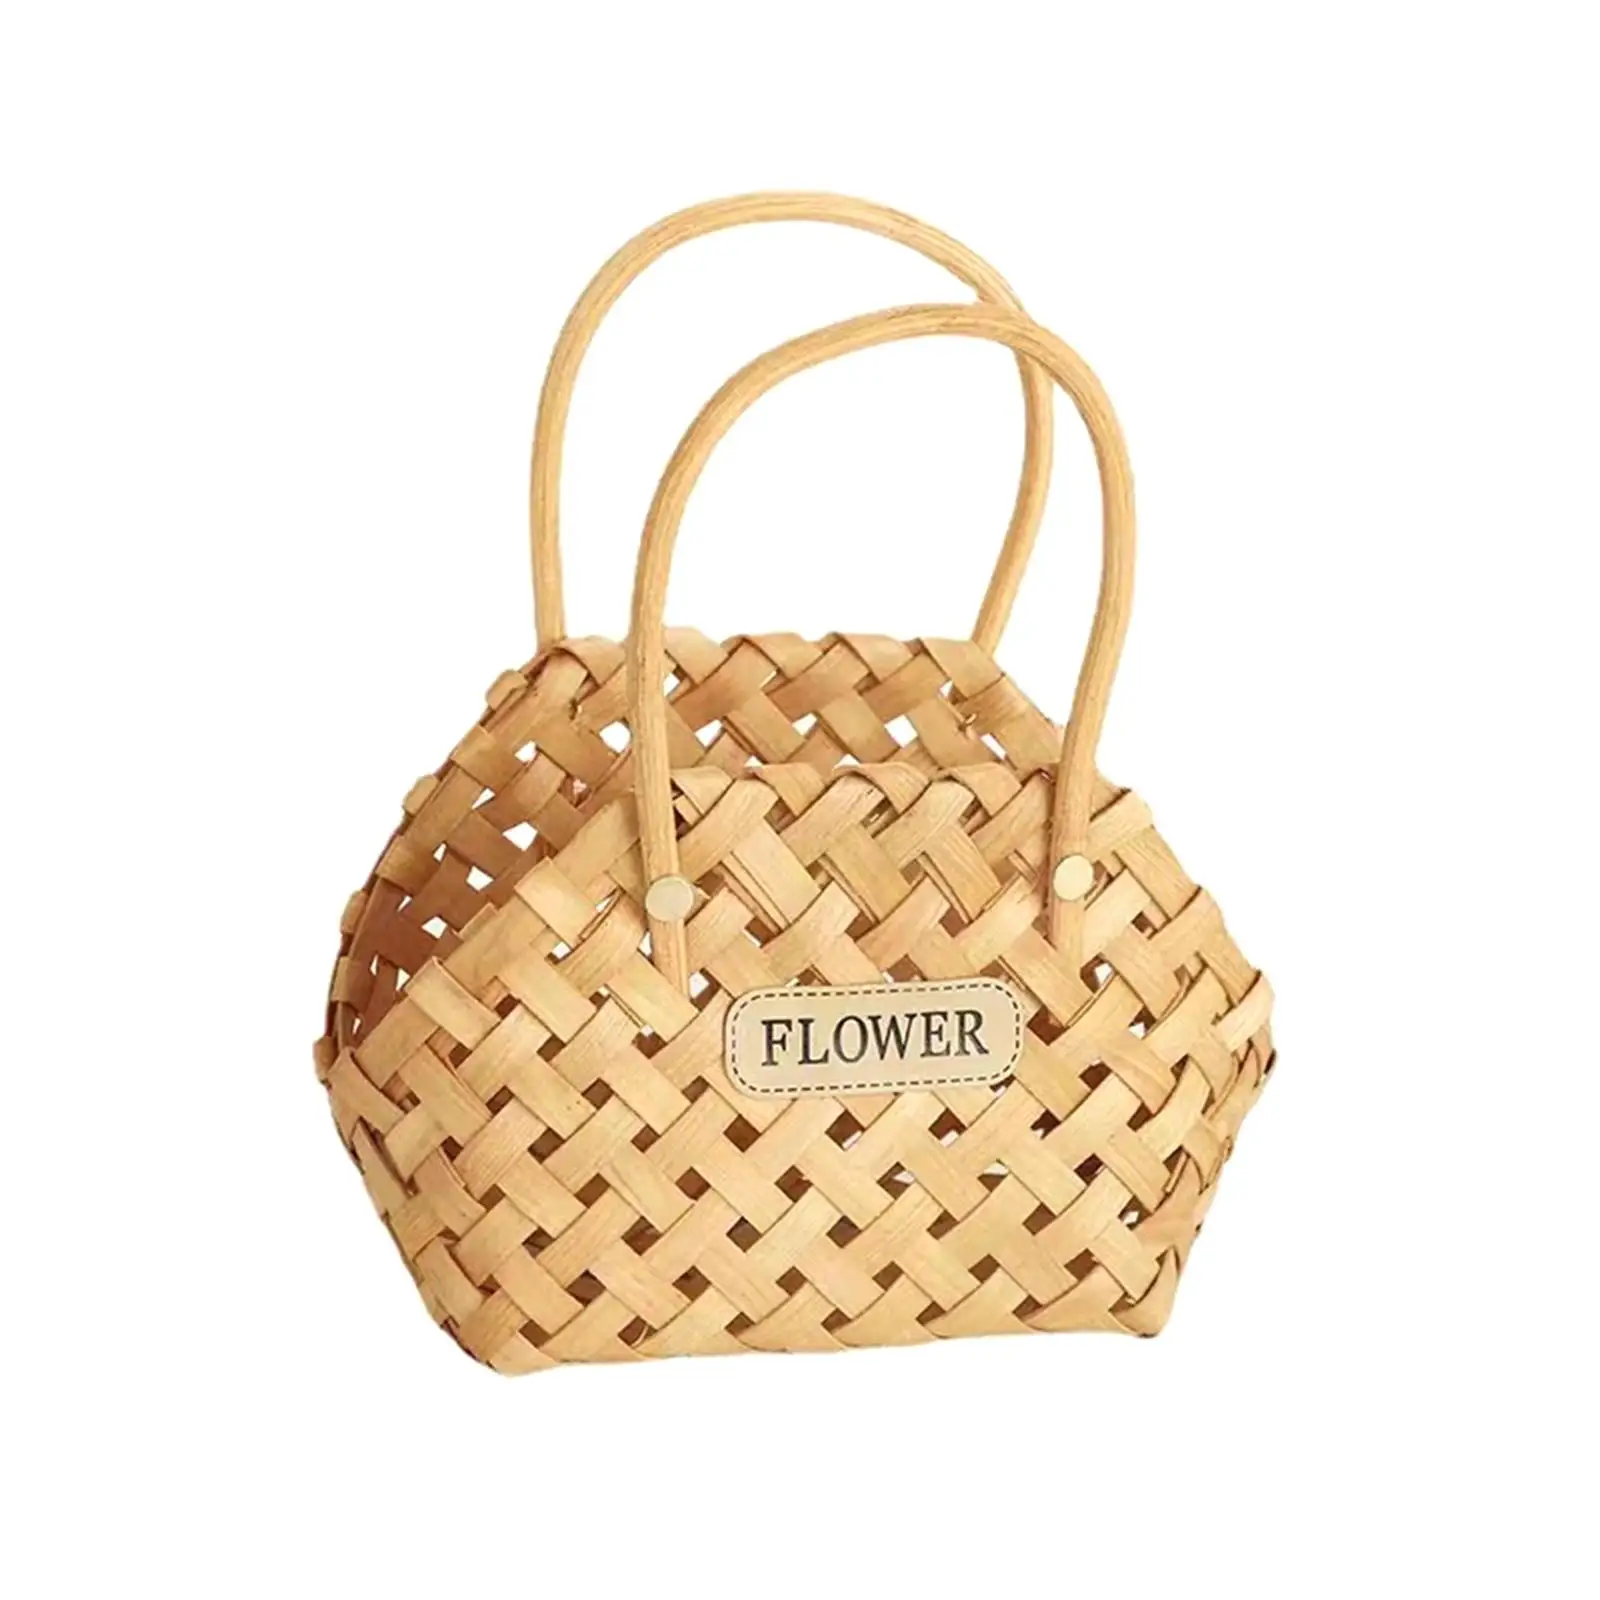 Handmade Wood Basket Reusable Birthday Gift Flower Girl Basket Storage Serving Basket for Flower Bread Vegetable Fruit Wedding